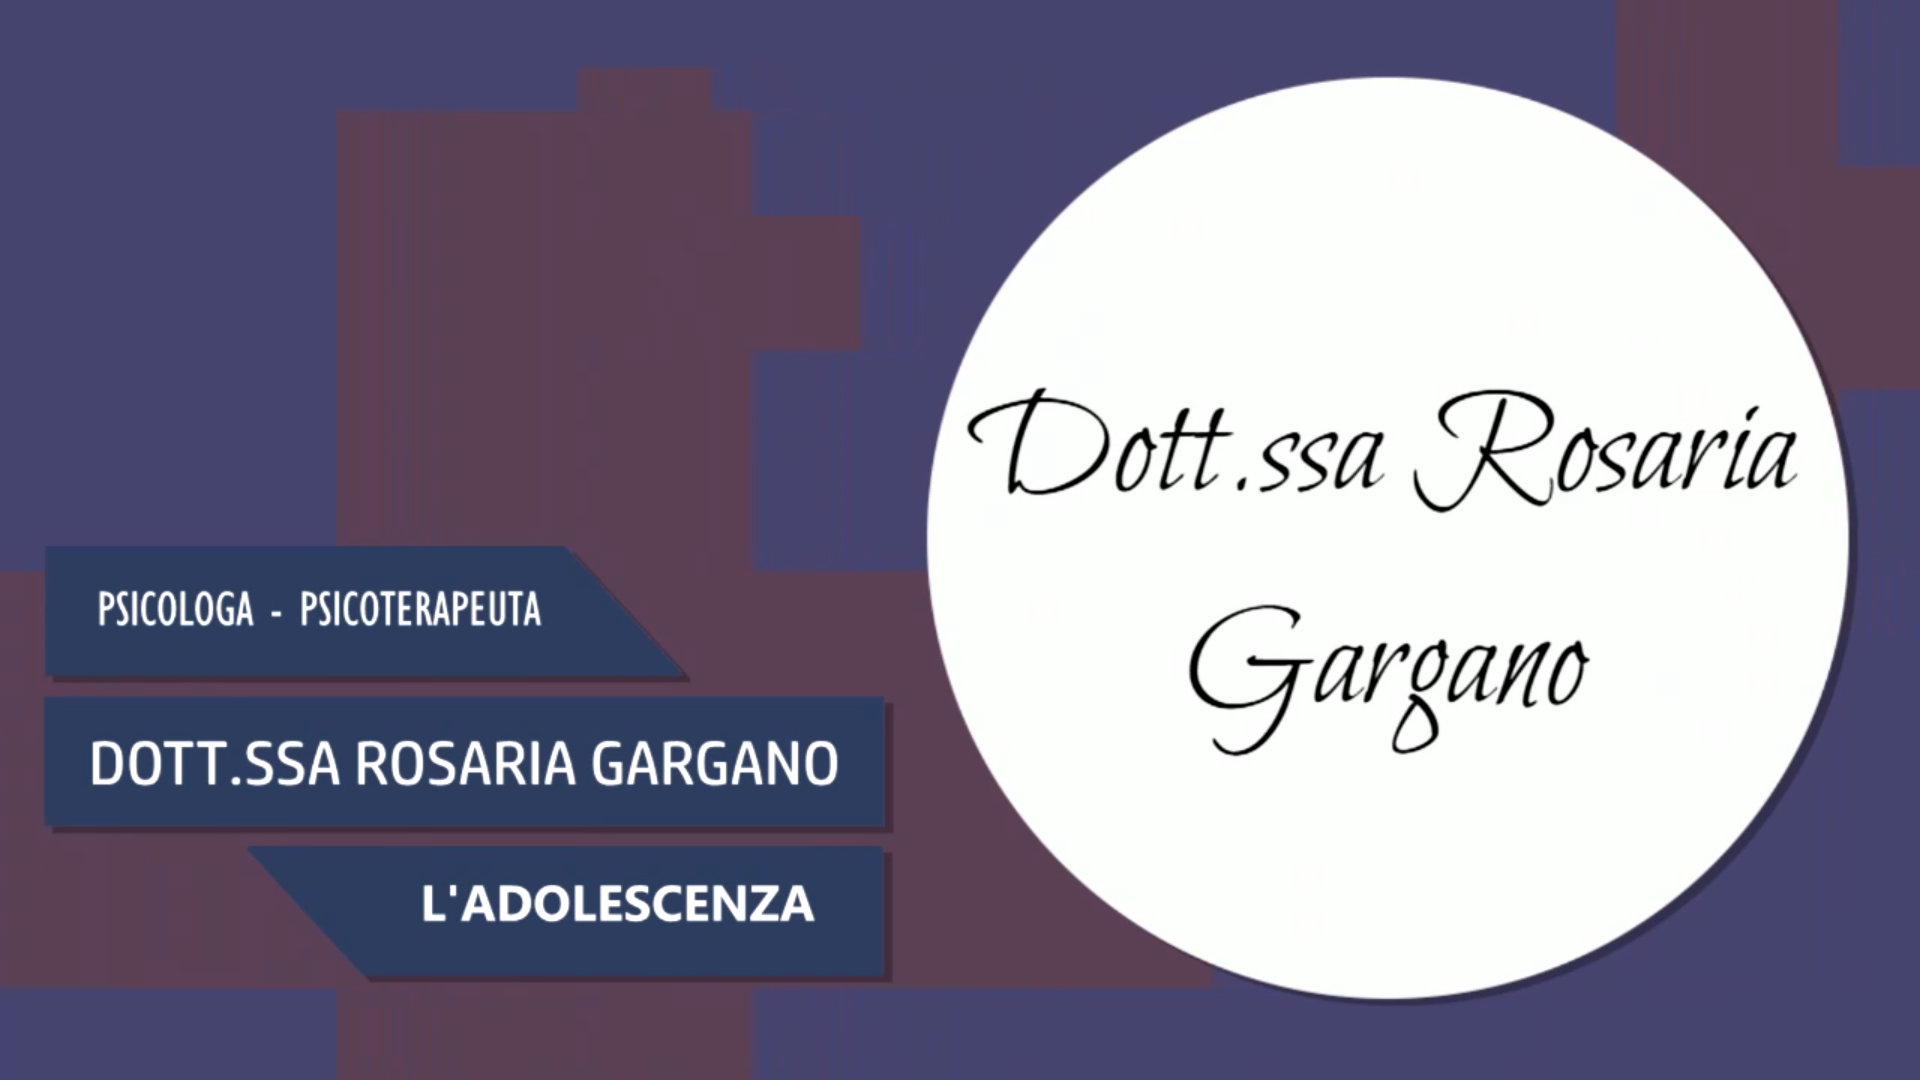 Intervista alla Dott.ssa Rosaria Gargano – L’adolescenza